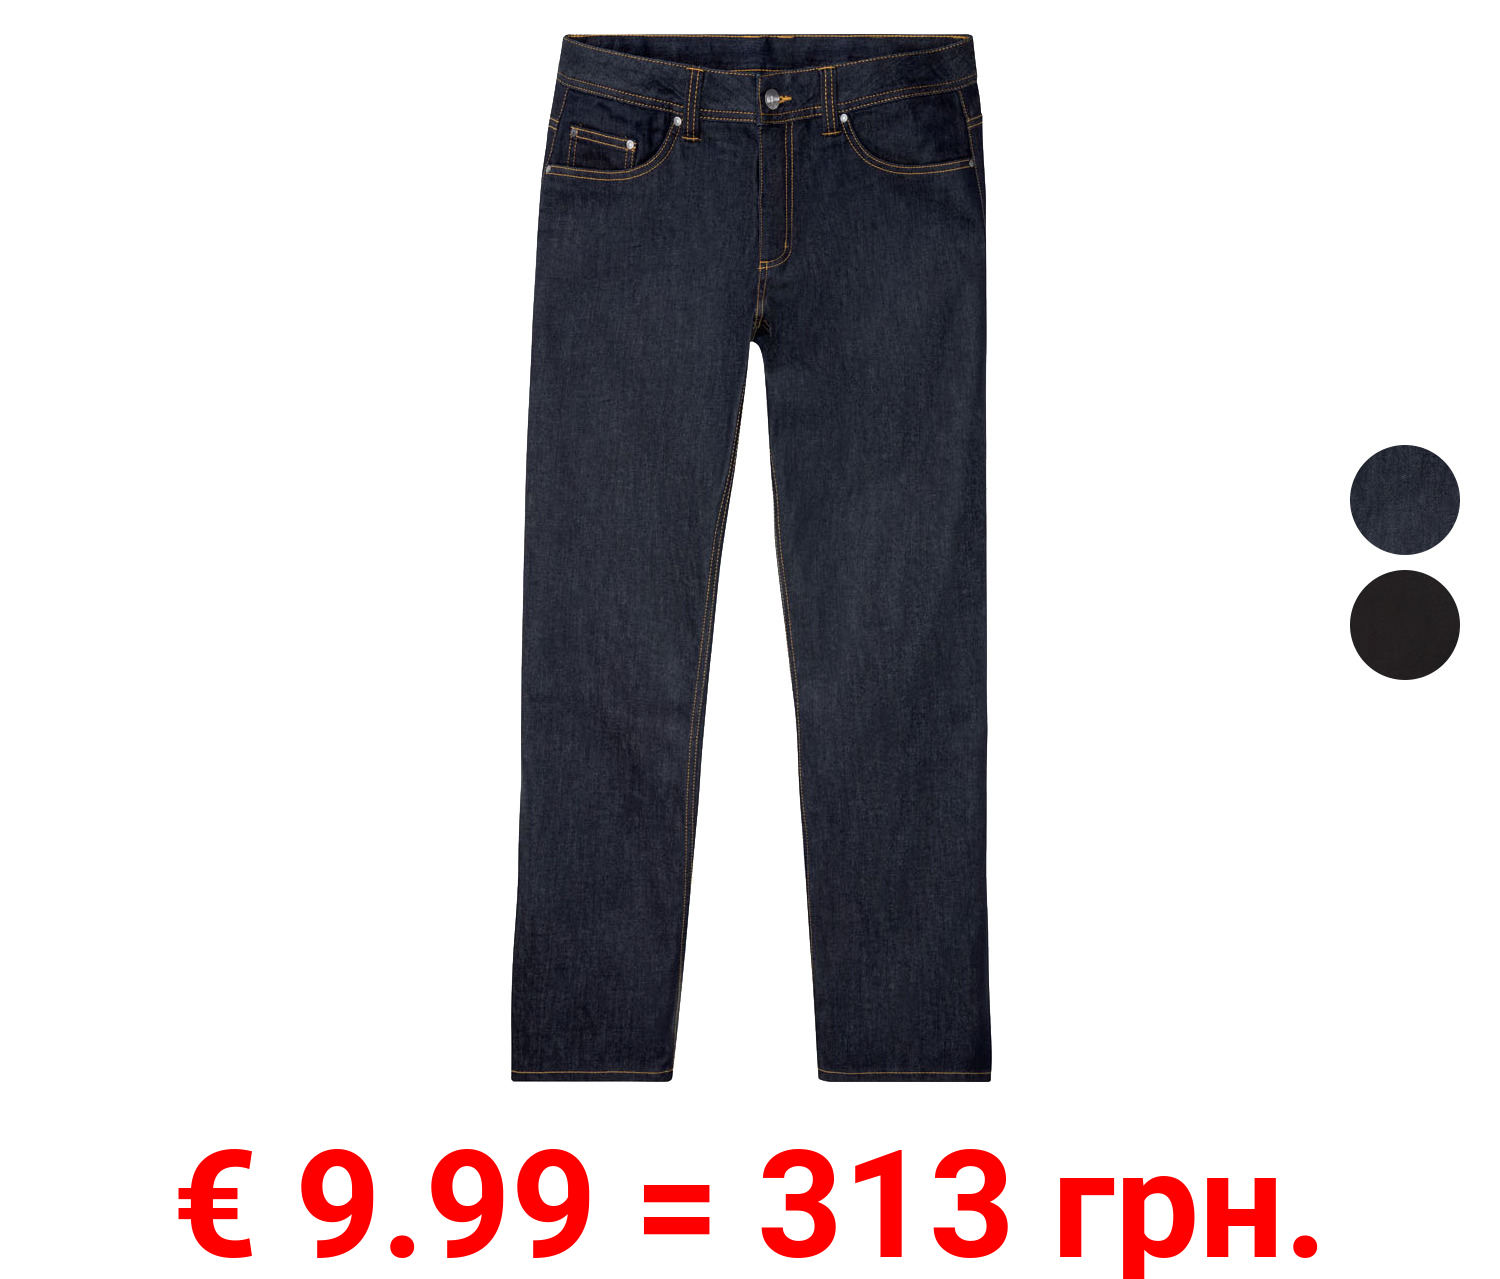 LIVERGY® Jeans Herren, Straight Fit